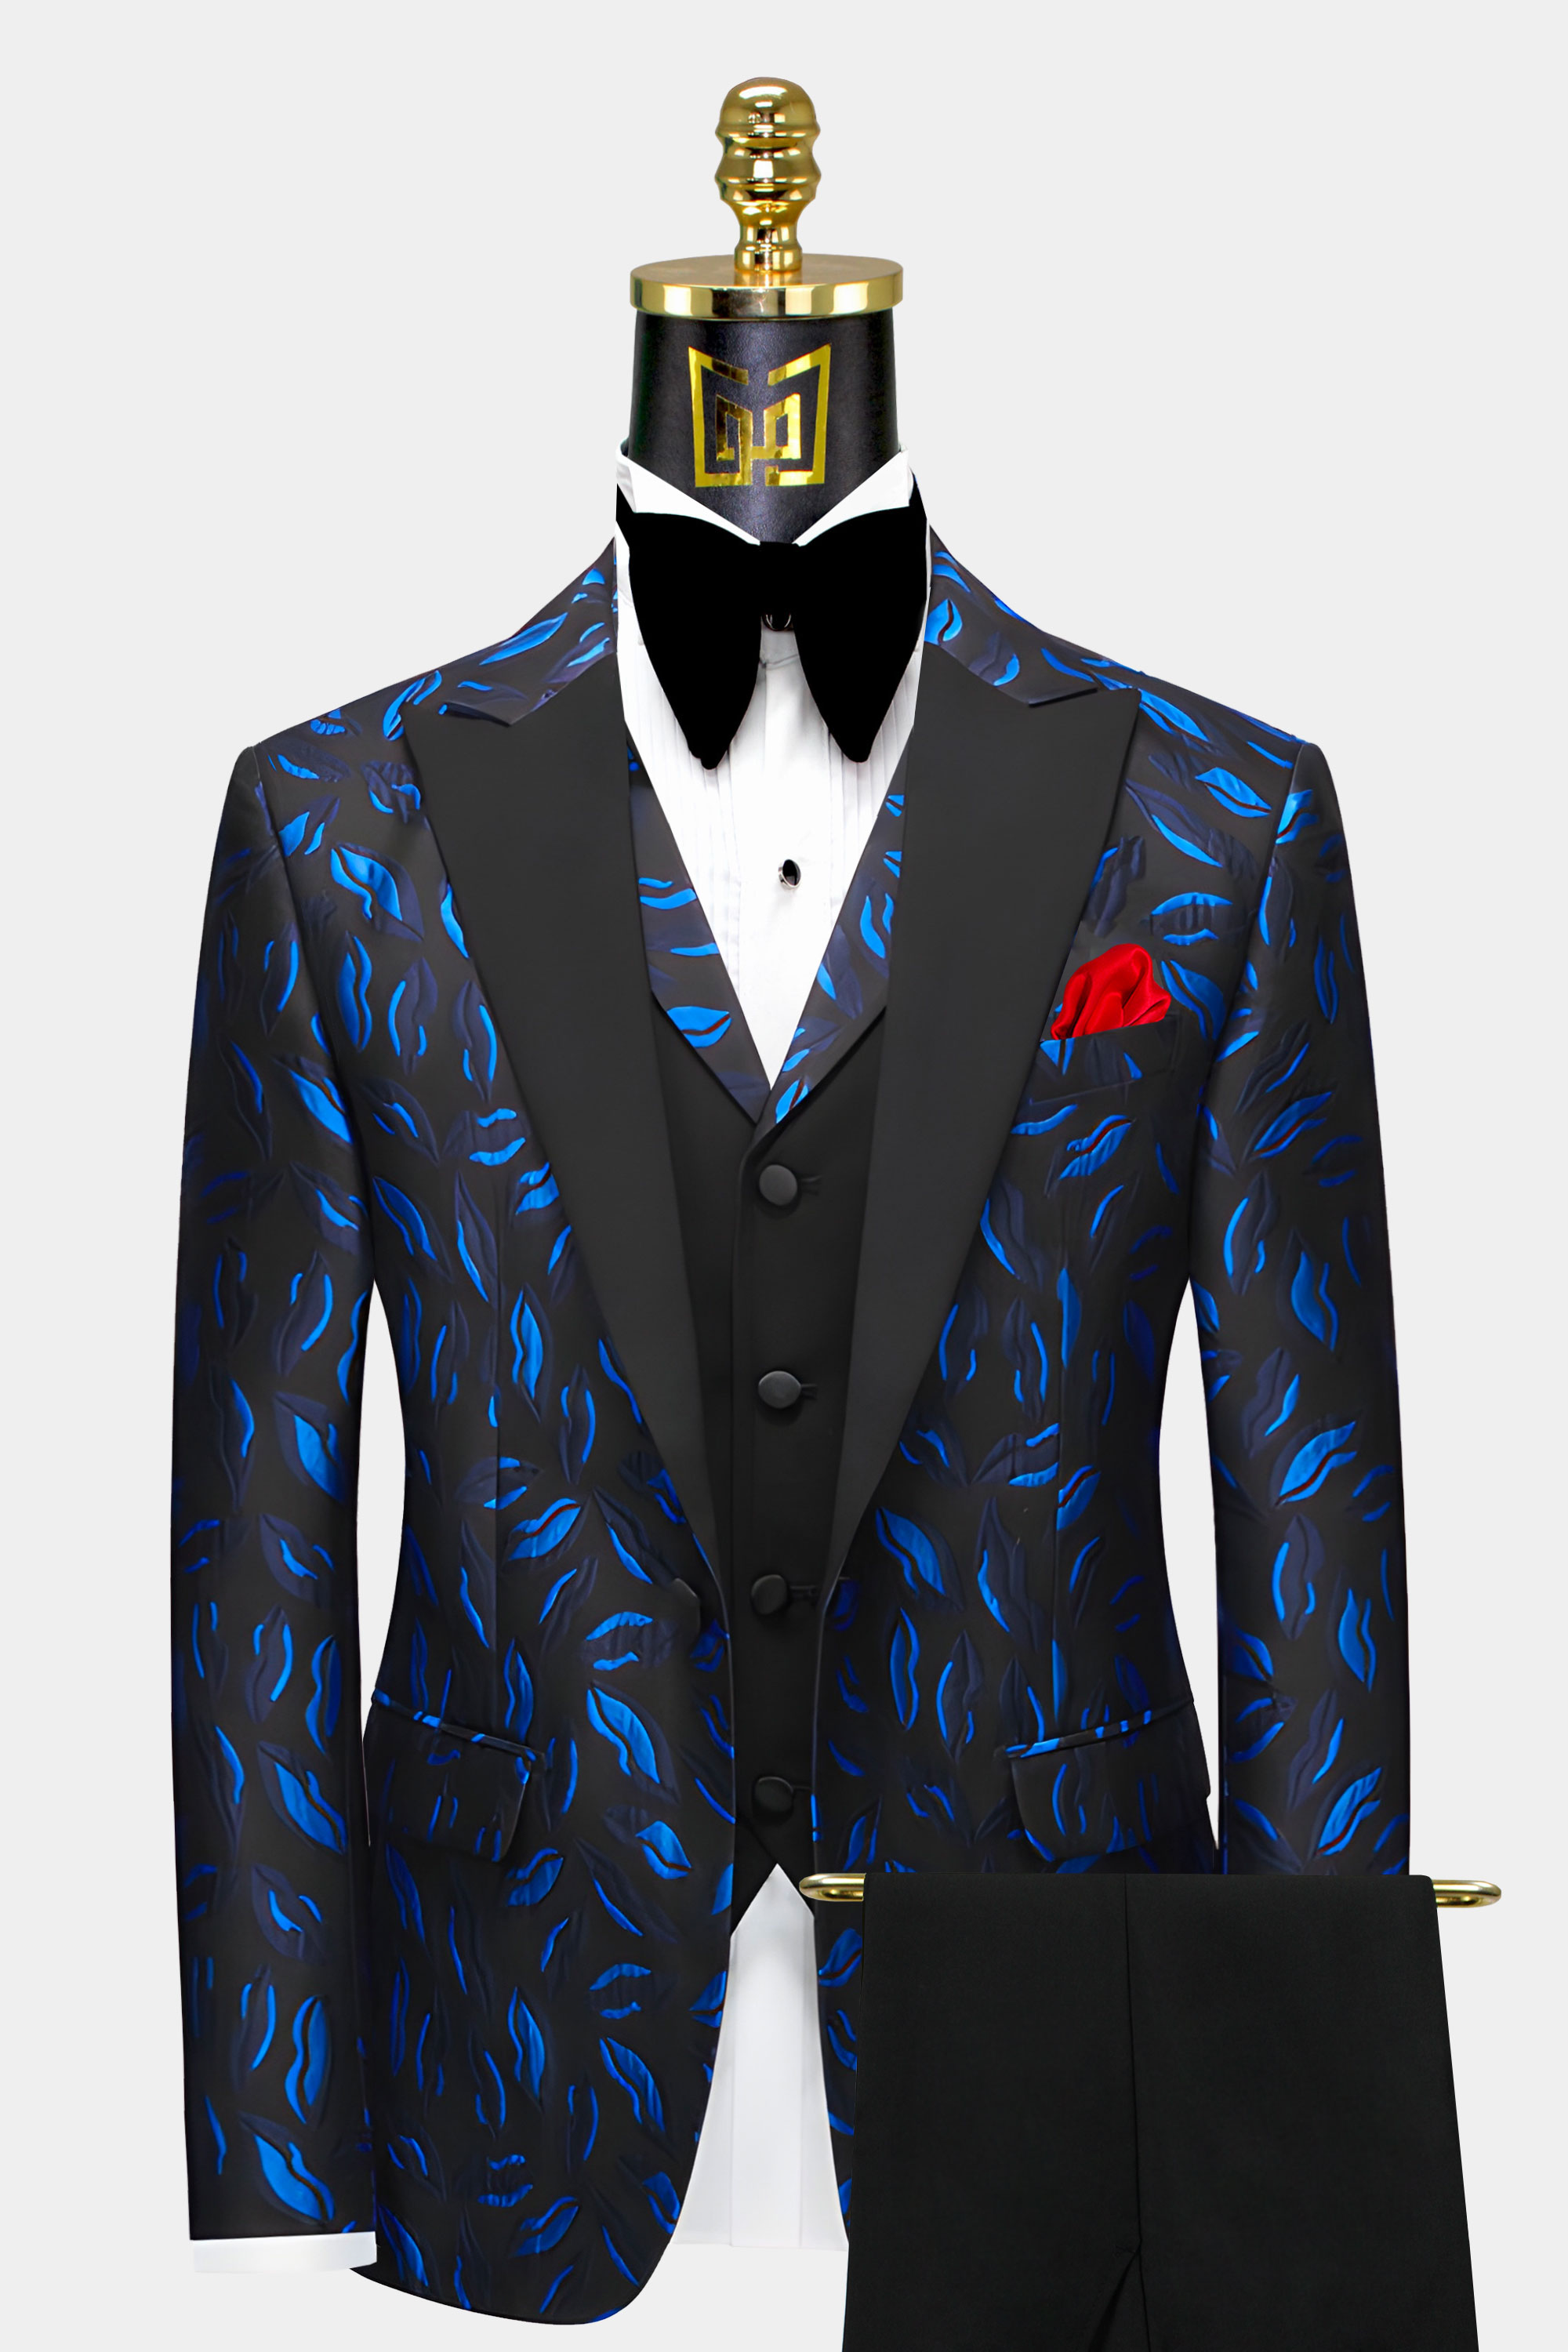 Dark-Royal-Blue-and-Black-Tuxedo-Wedding-Prom-Groom-Suit-For-Men-from-Gentlemansguru.com